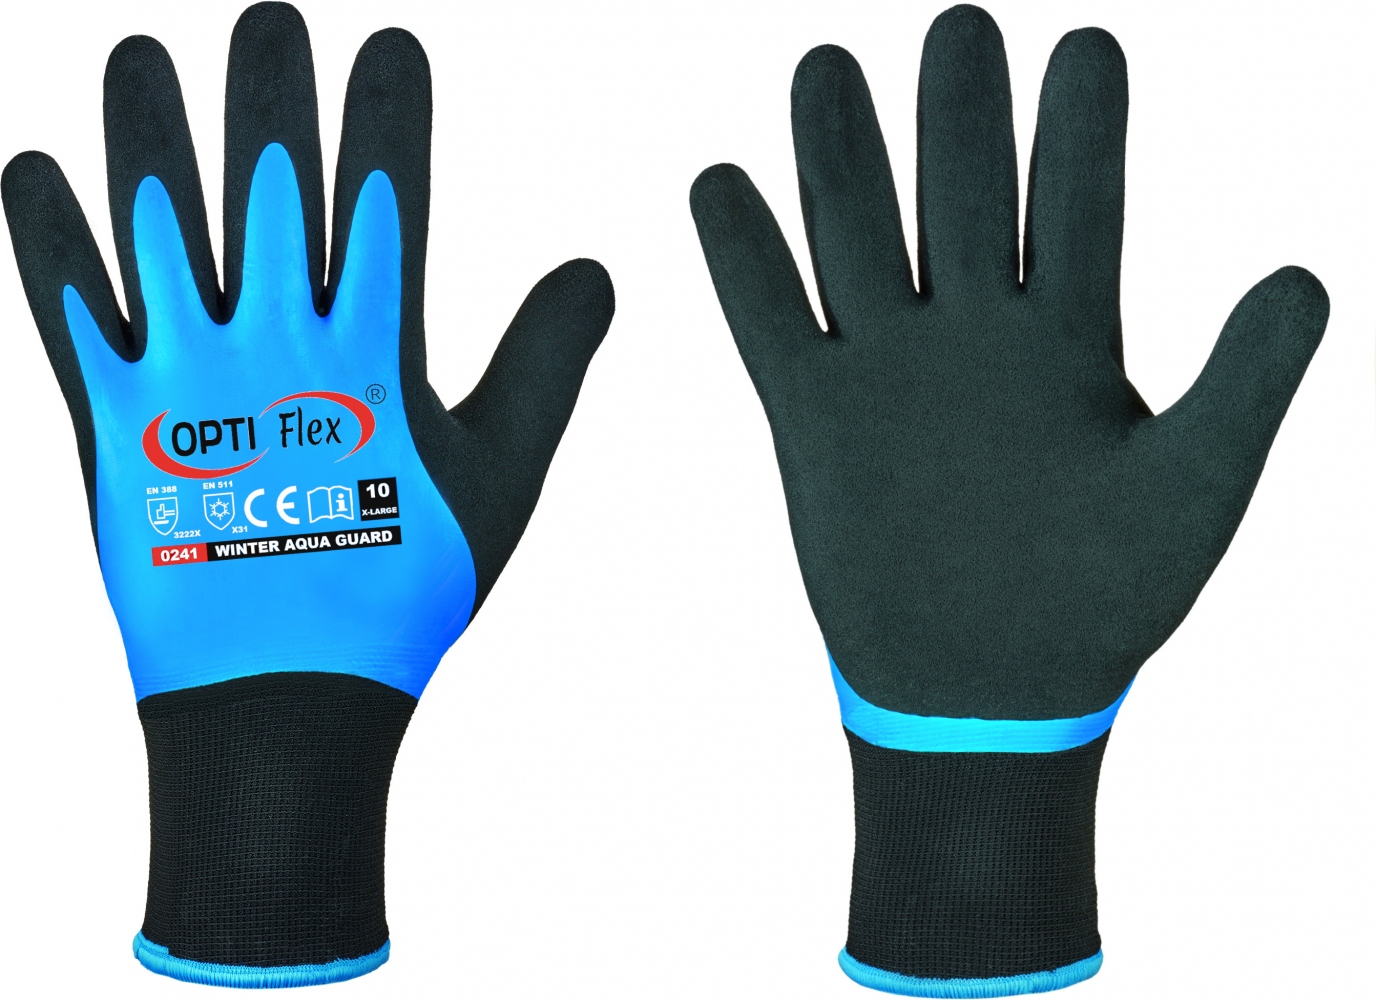 pics/Feldtmann 2016/Handschutz/google/optiflex-0241-winter-aqua-guard-cold-moisture-resistant-gloves-en388-en511.jpg